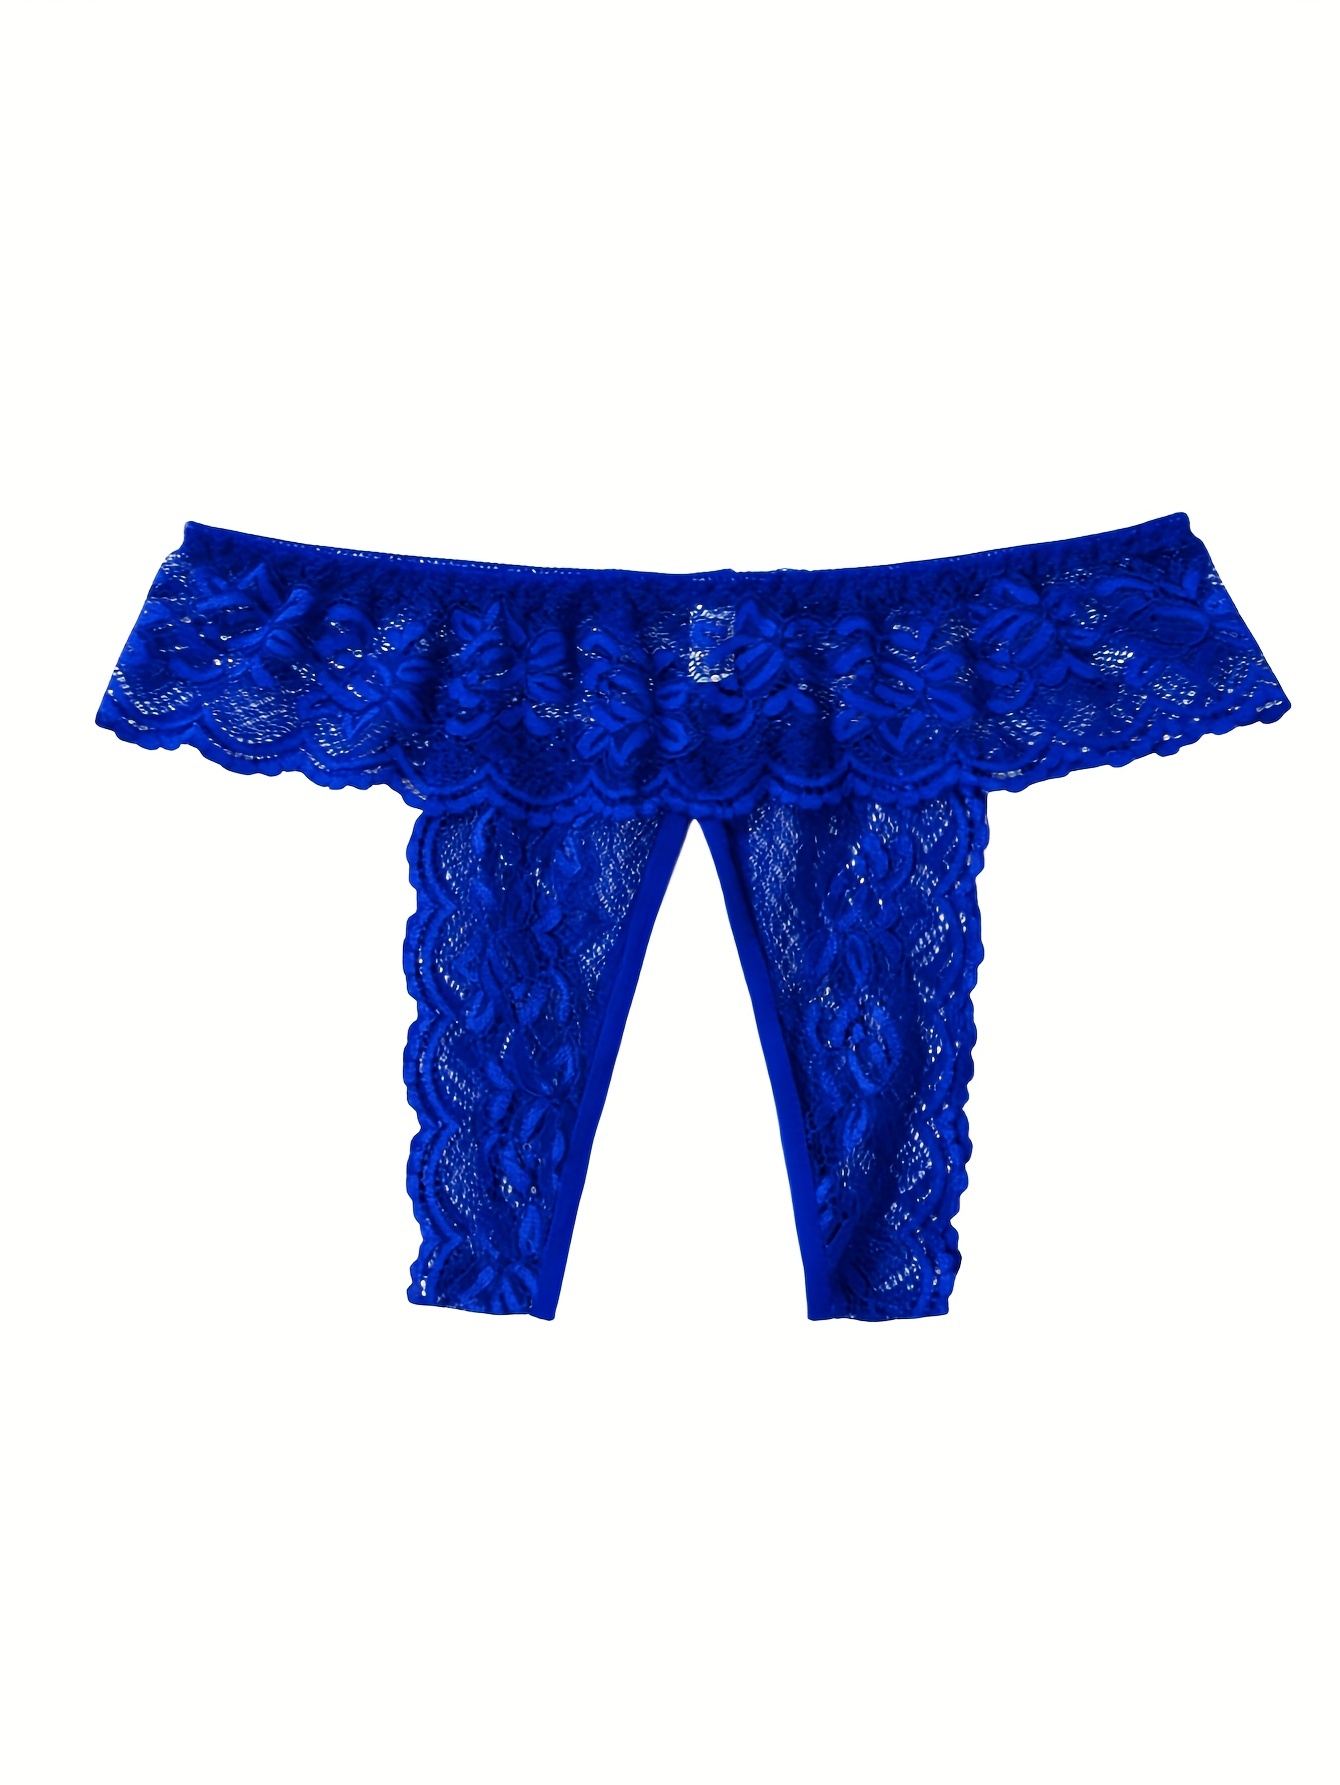 Cotonie1Pc Women Sexy Floral Lace Panty Underwear Brief Plus Crotchless  Thong Lingerie 